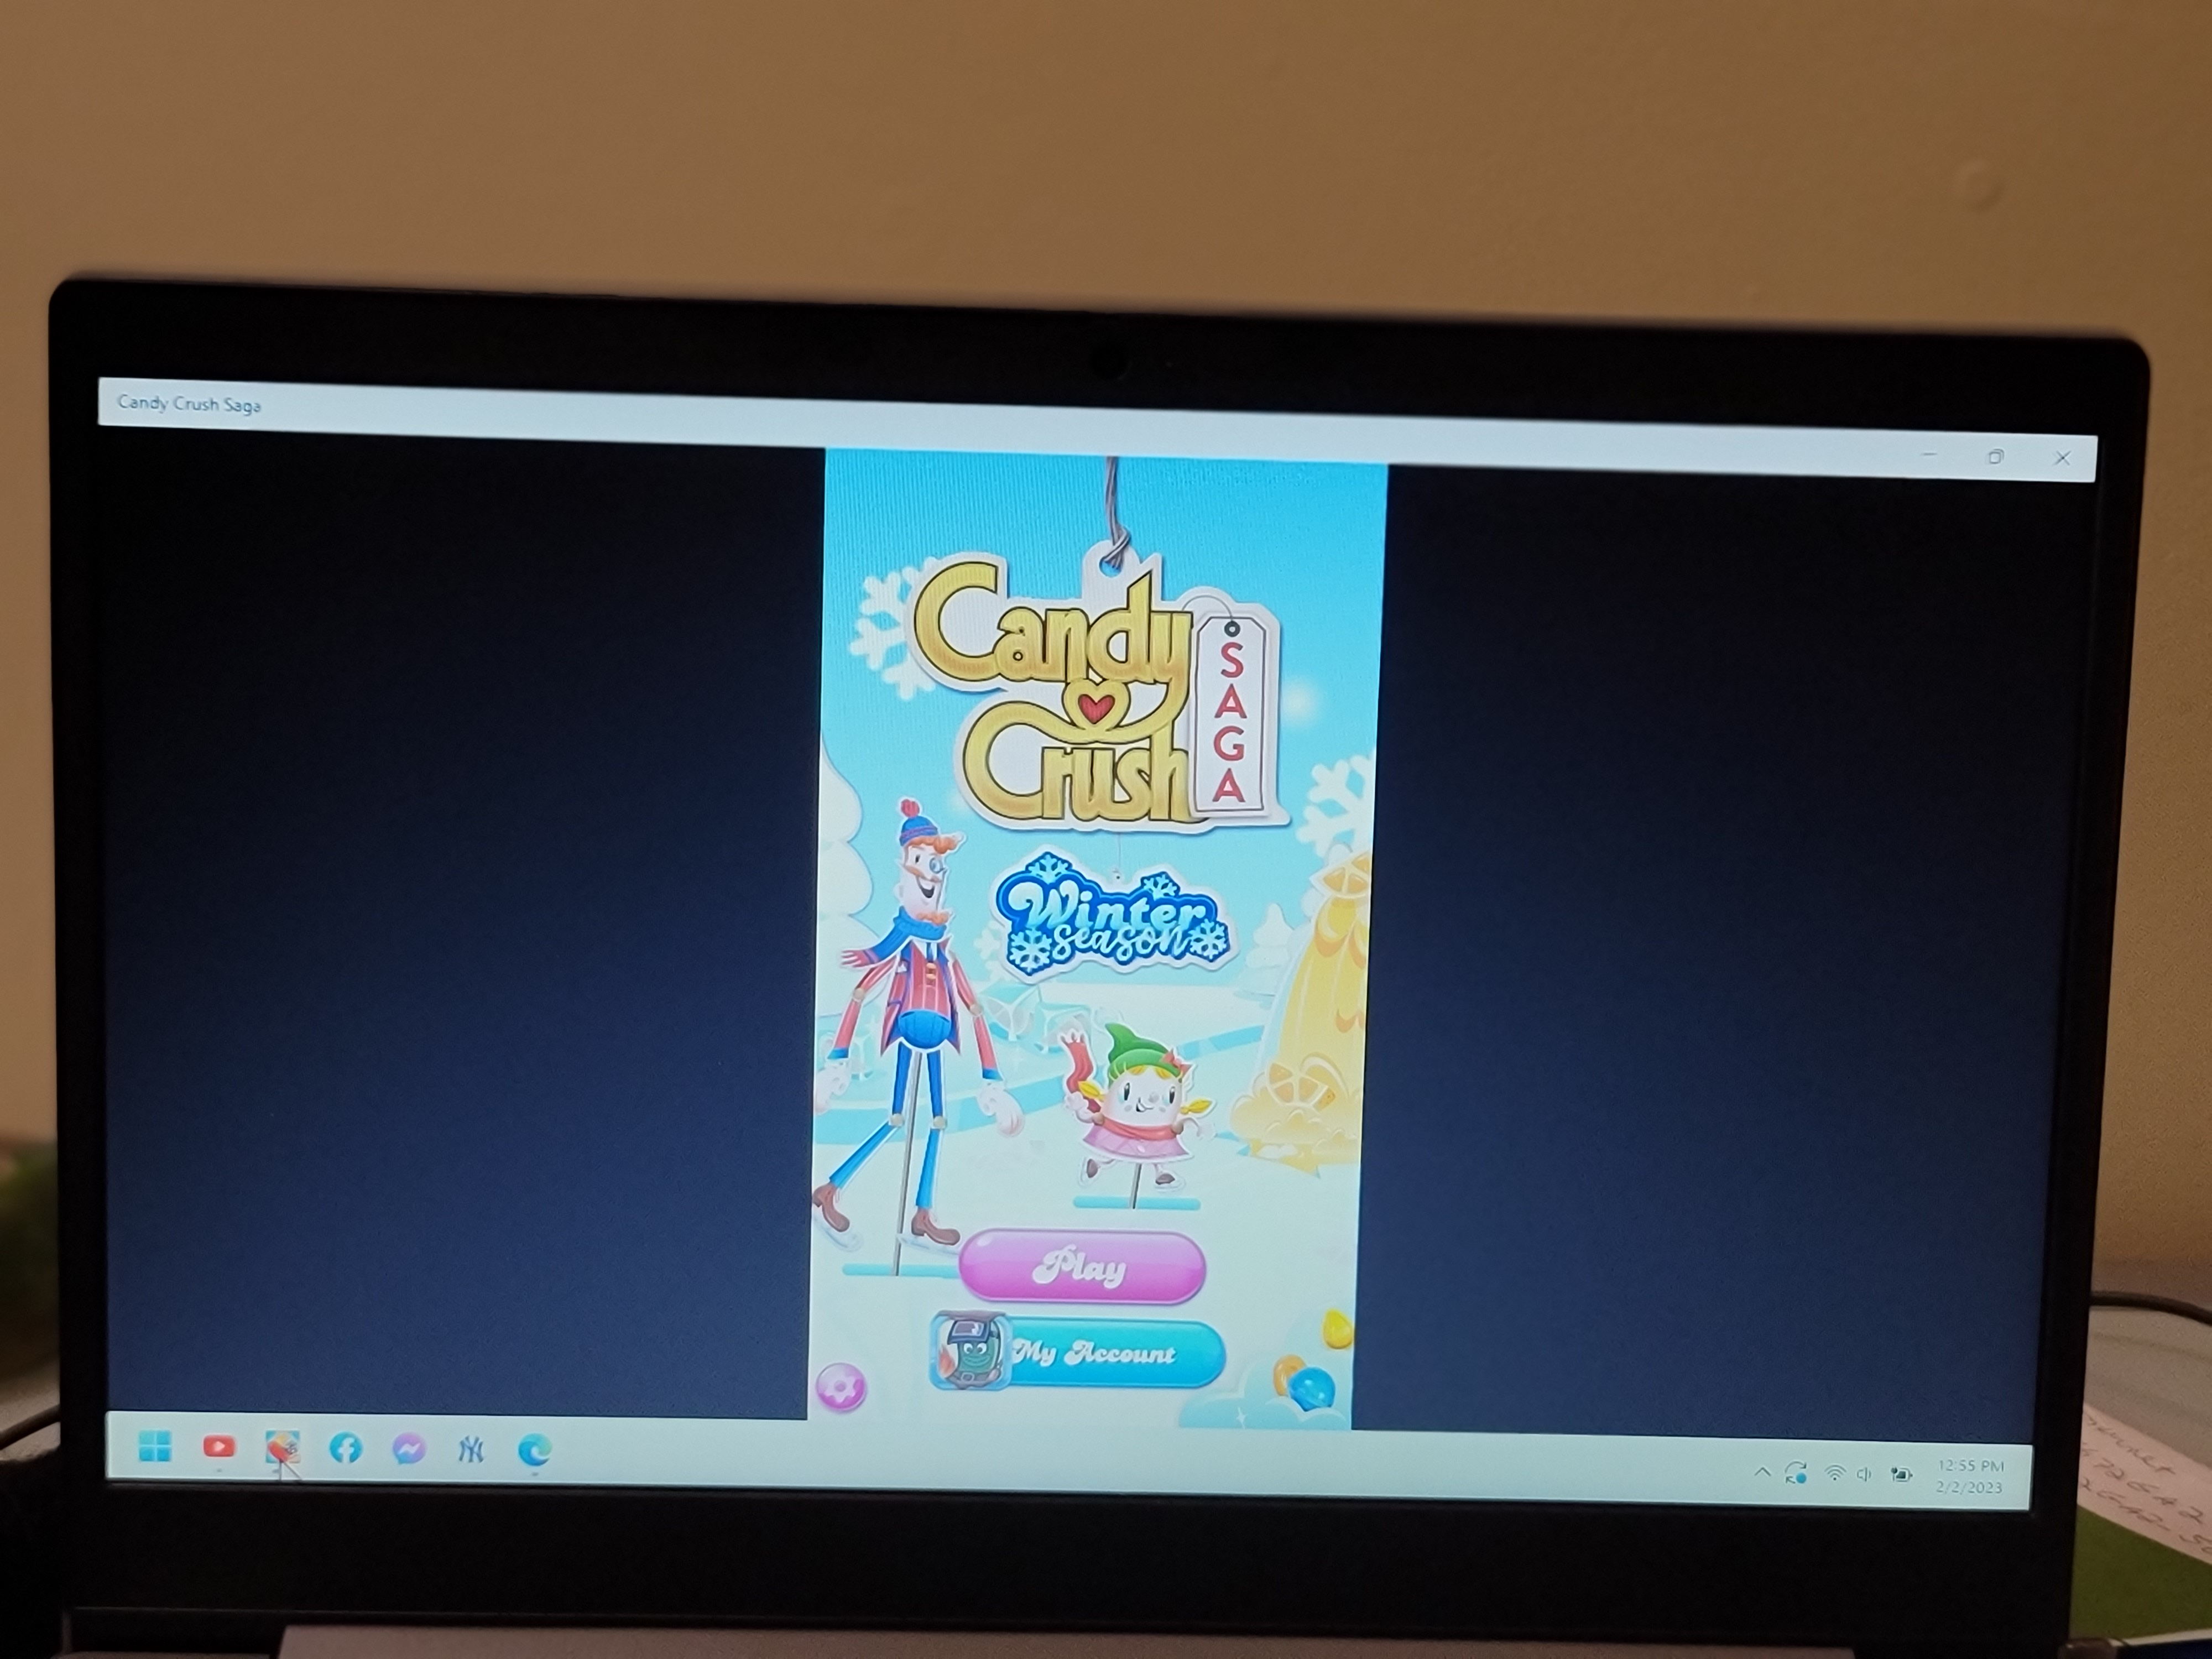 How To Play Candy Crush Saga on PC 